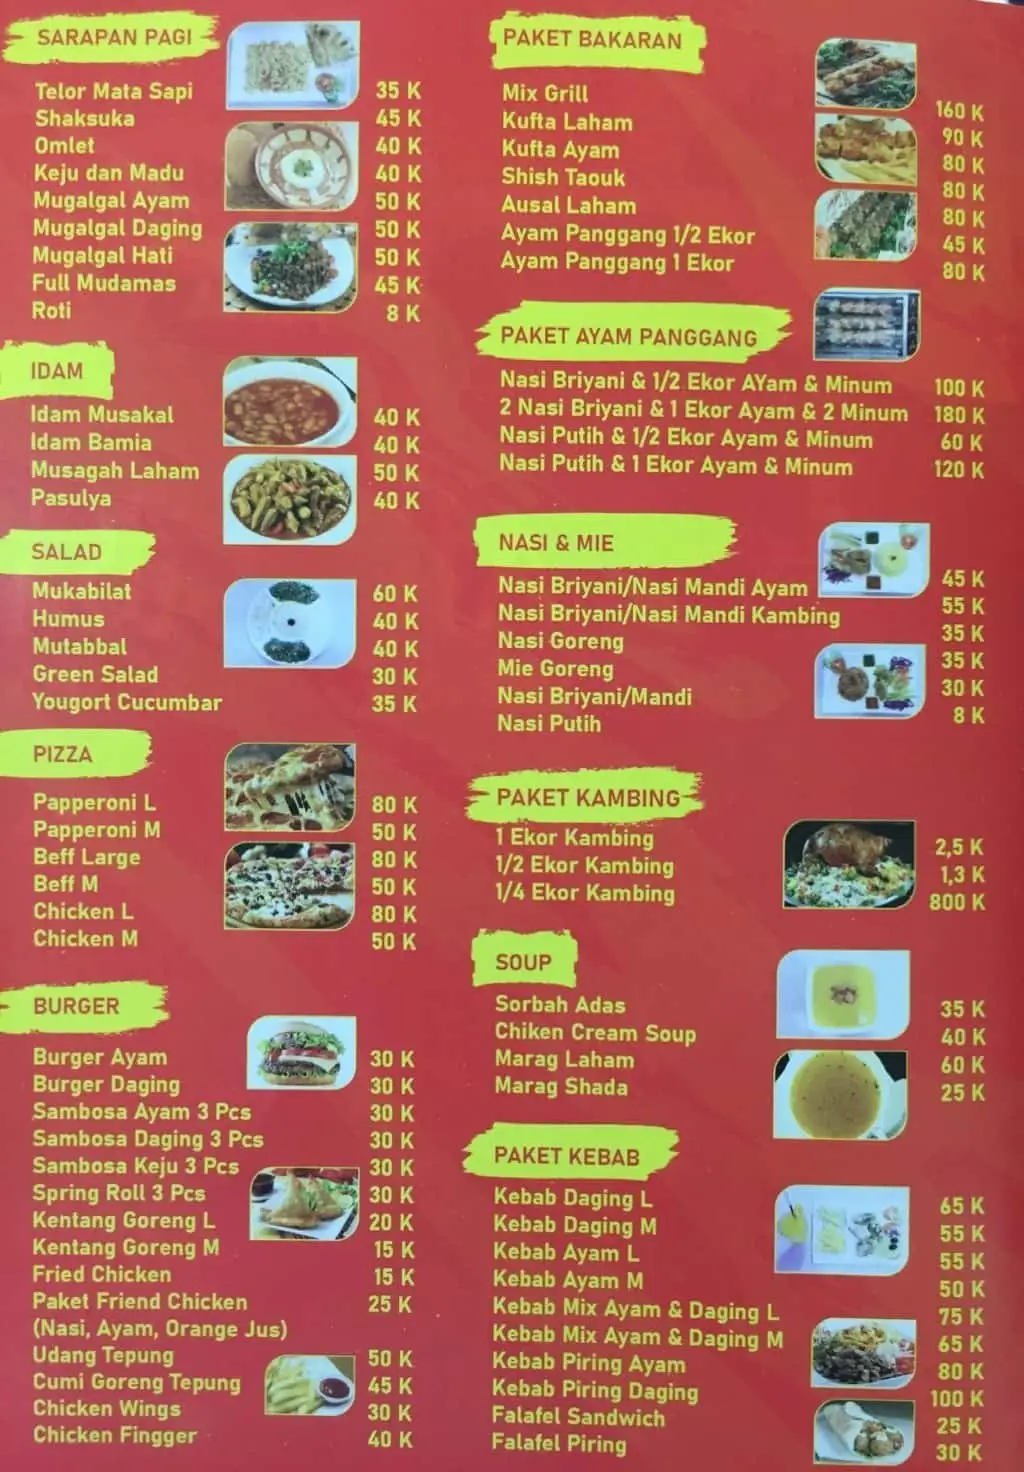 Ali Baba - Kebab & Cafe Shisha